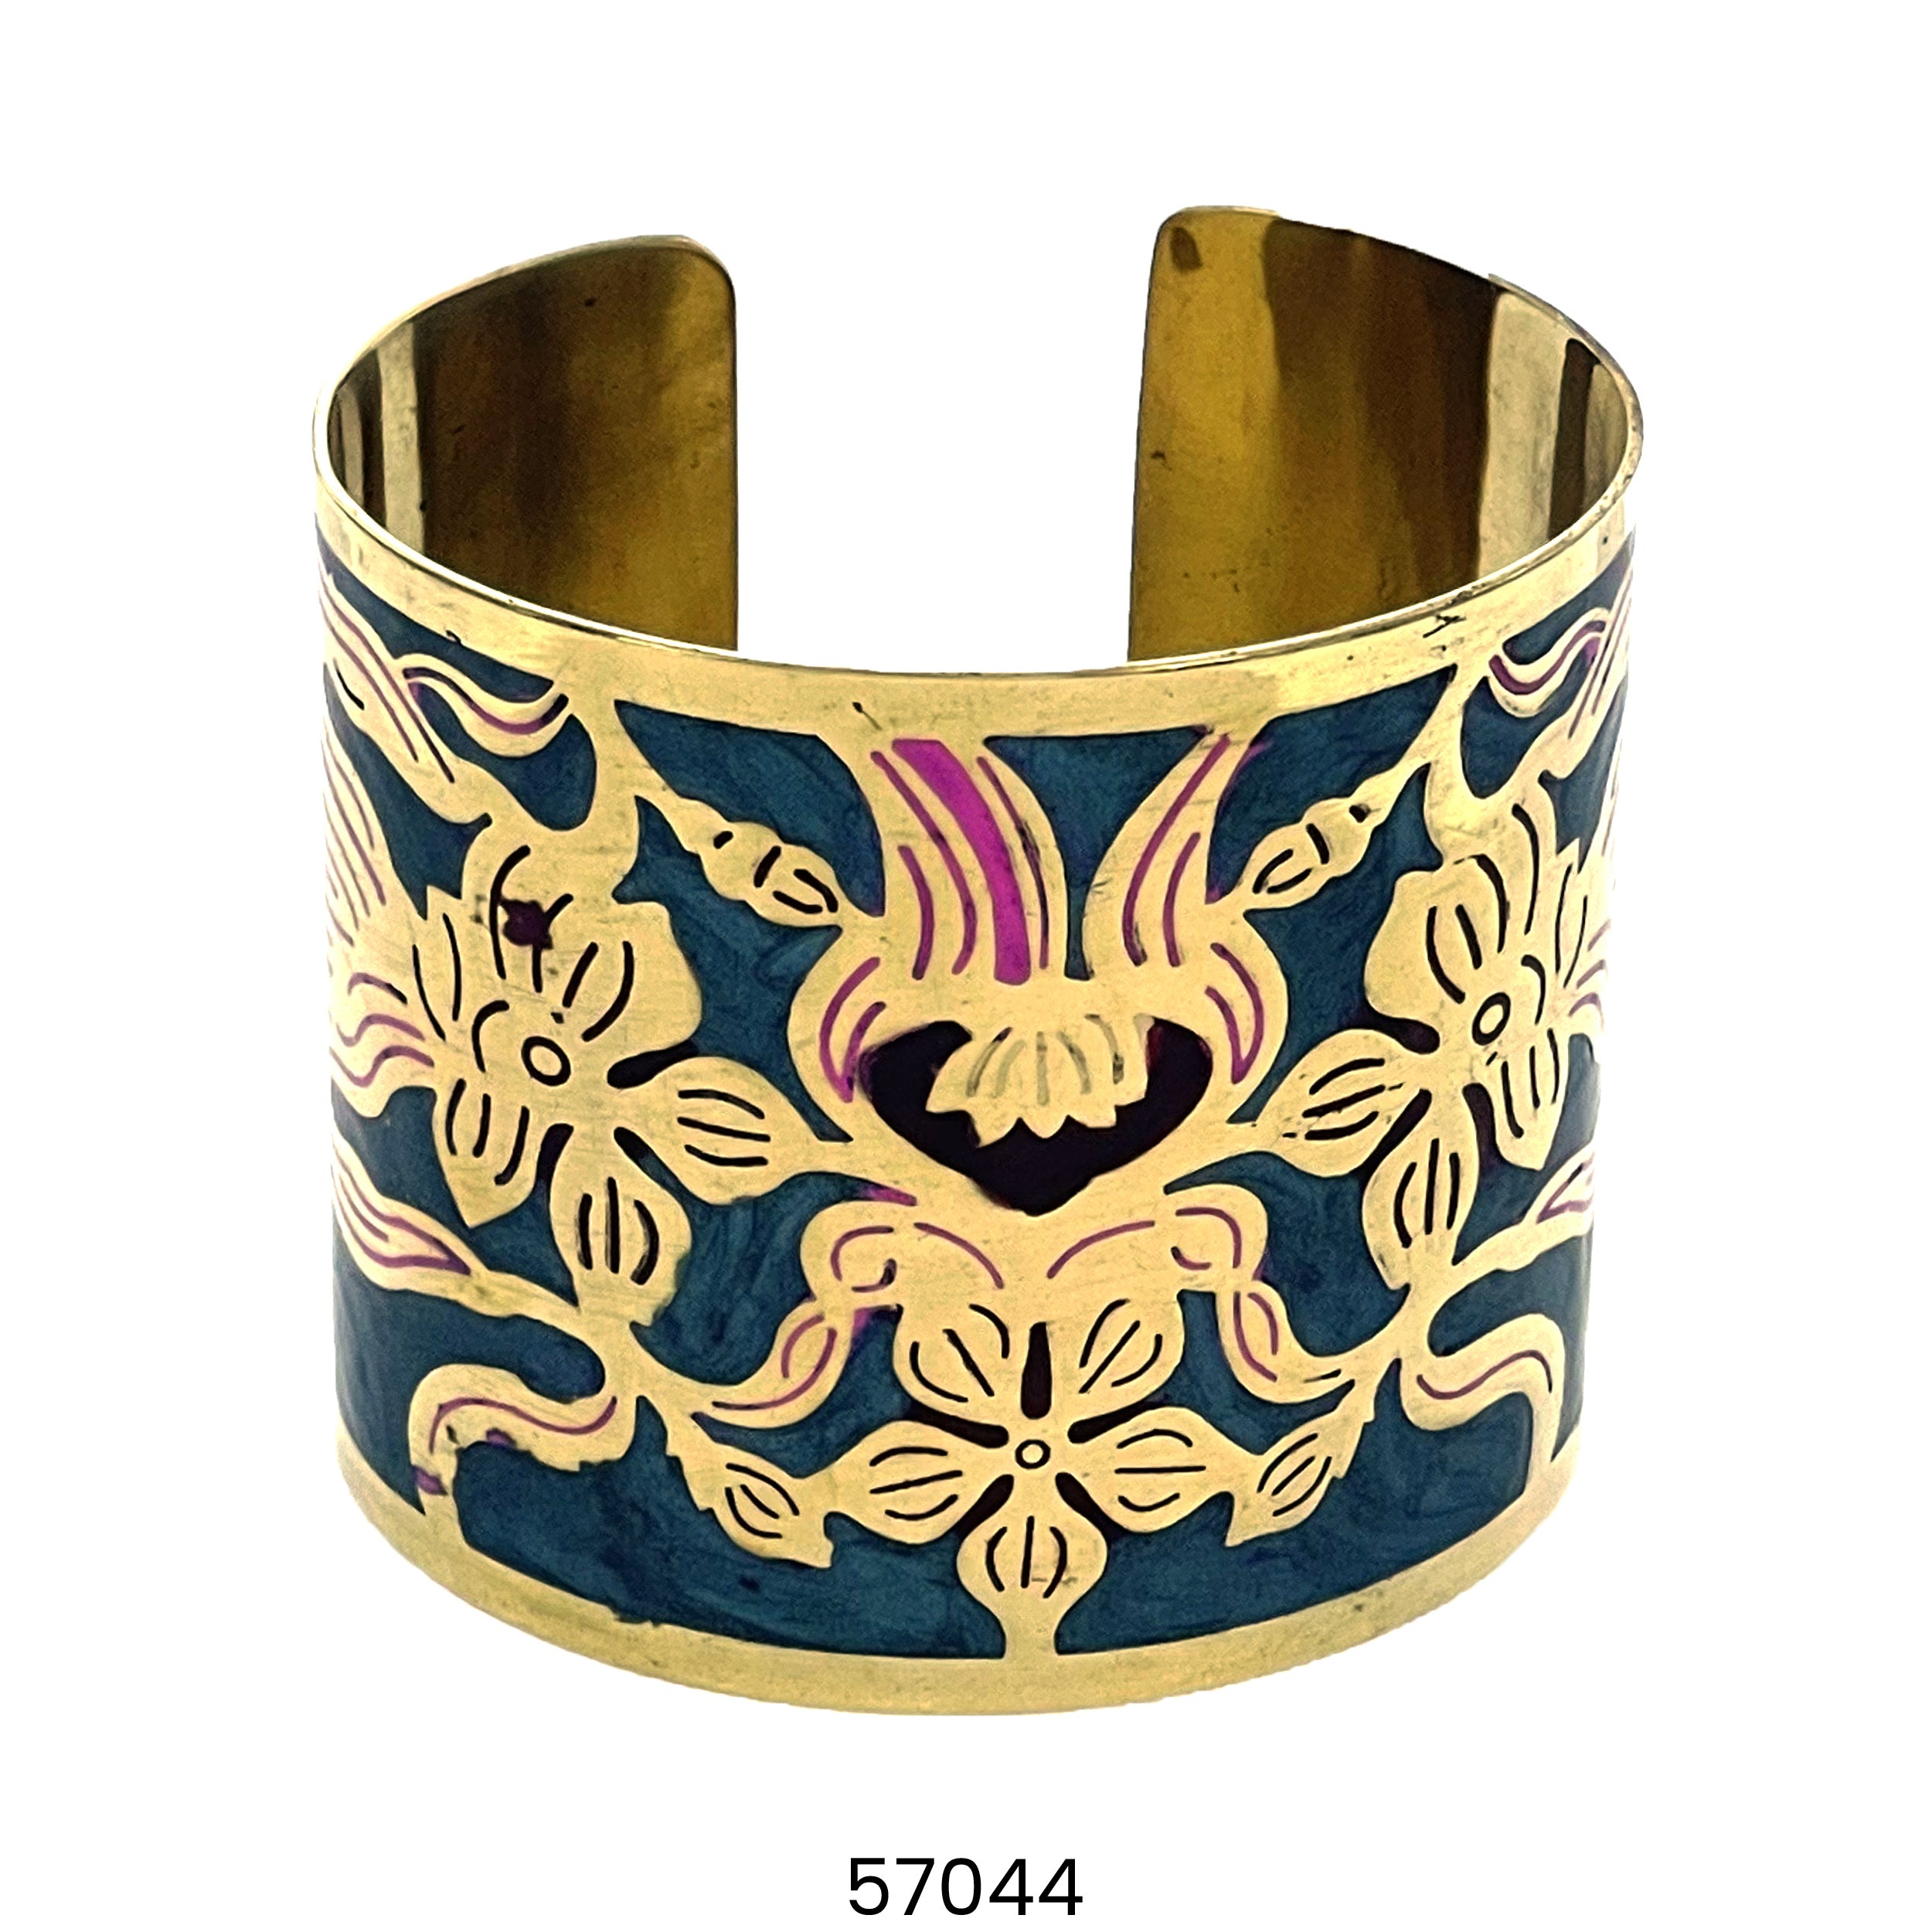 Hand Engraved Cuff Bangle Bracelet 57044